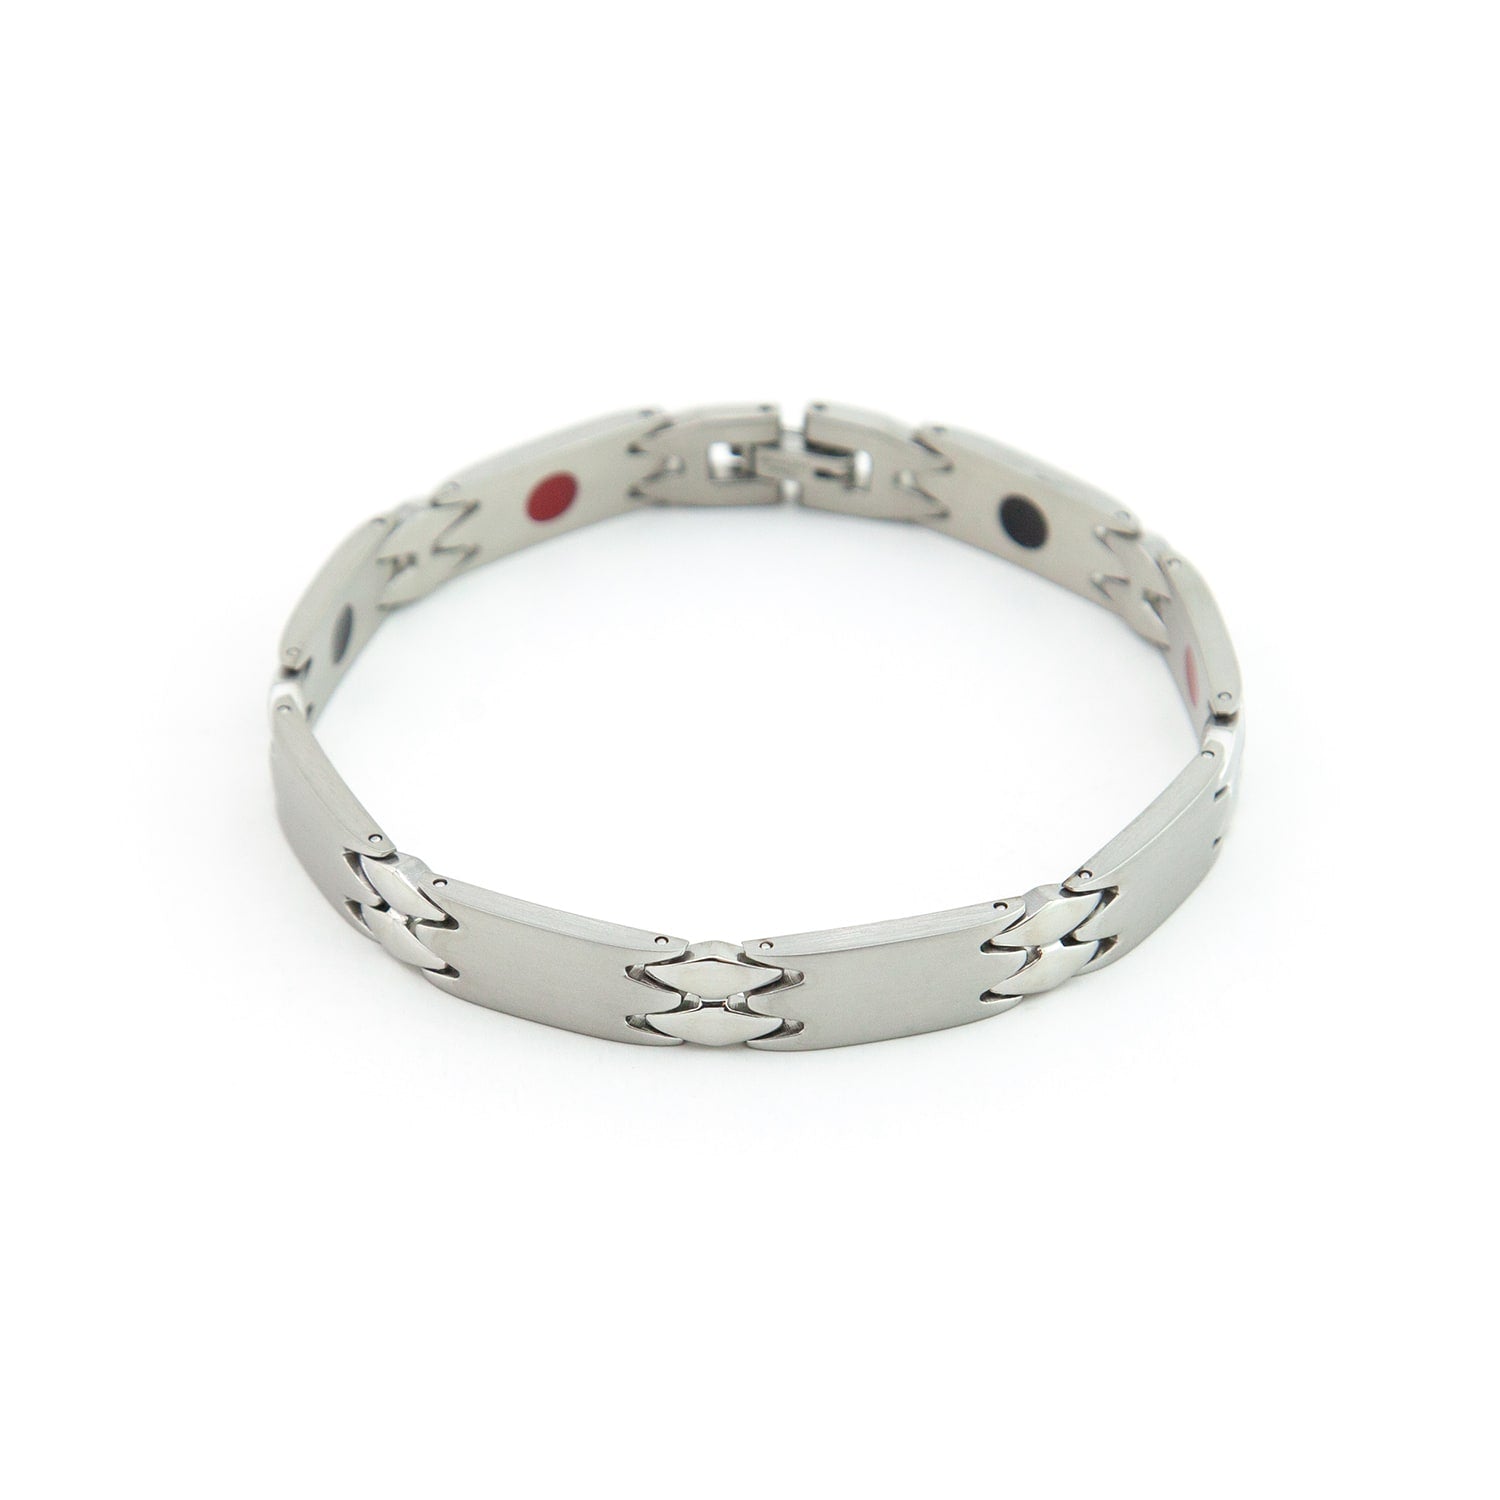 Reflection - Negative Ion bracelet, Stainless Steel